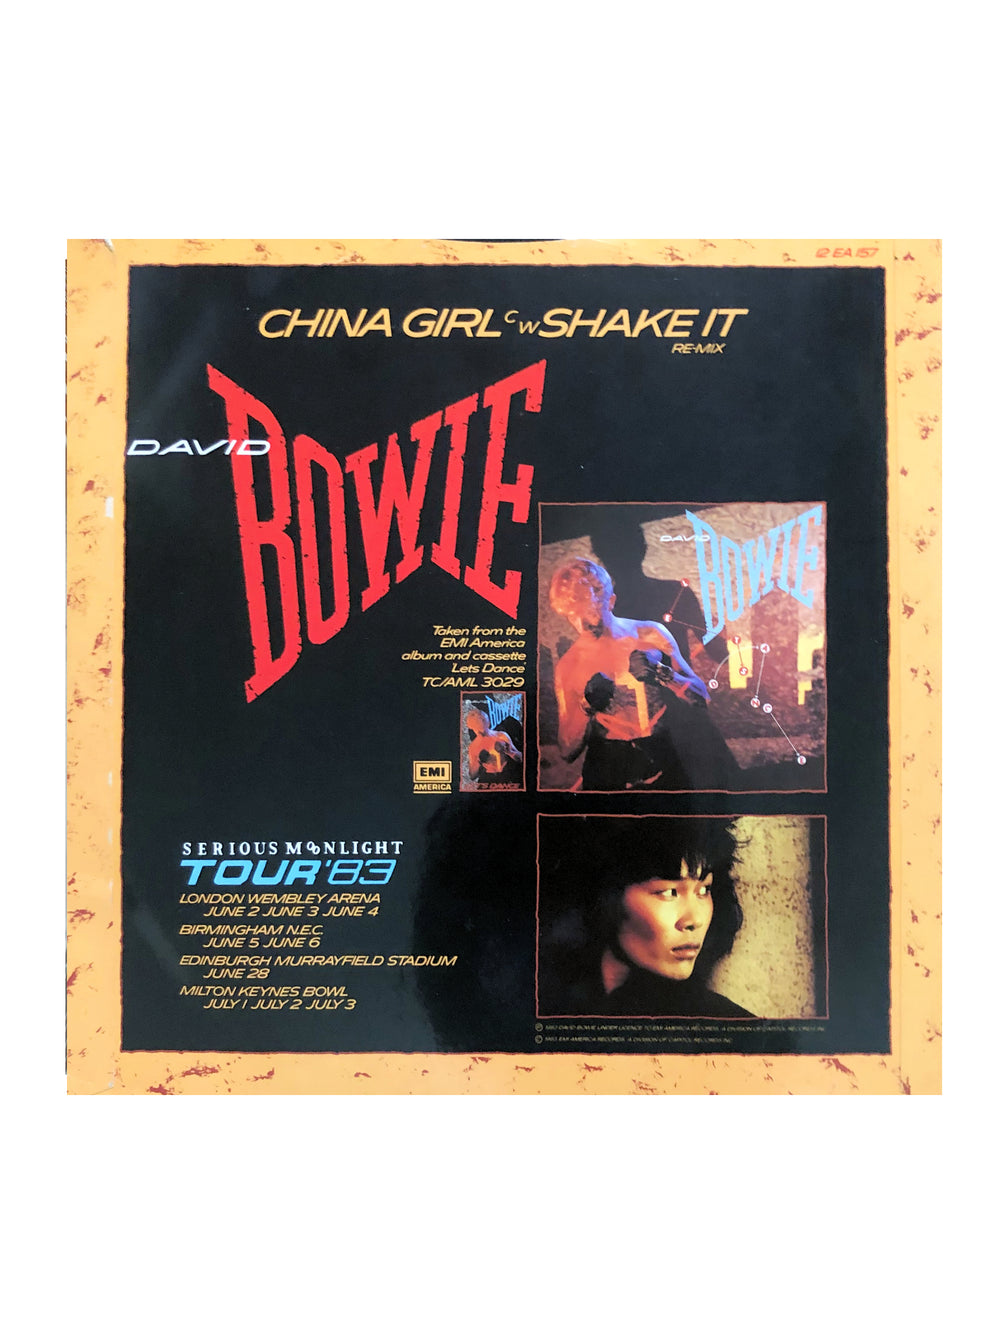 David Bowie – China Girl / Shake It (Re-Mix)Vinyl 12 Inch Preloved:1983